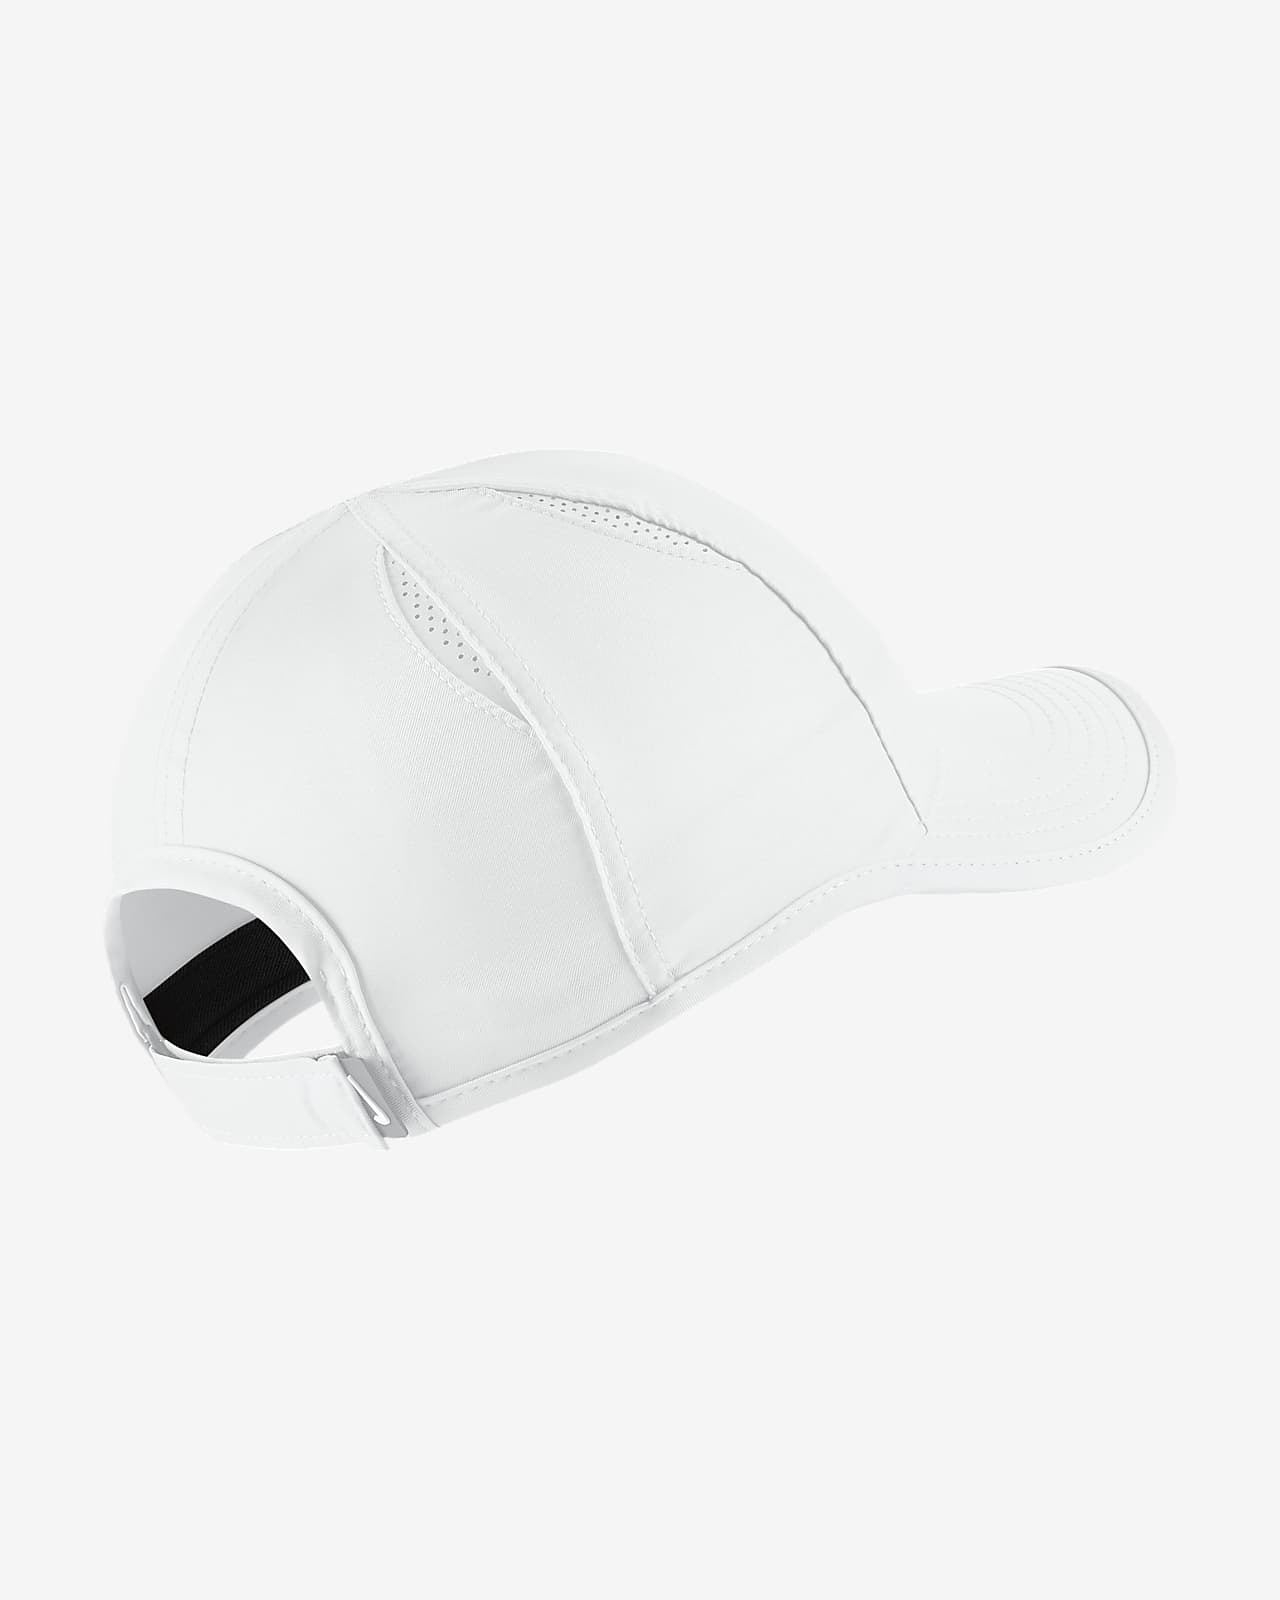 Nike Aerobill Featherlight Hat - Desert Berry/Reflective Silver